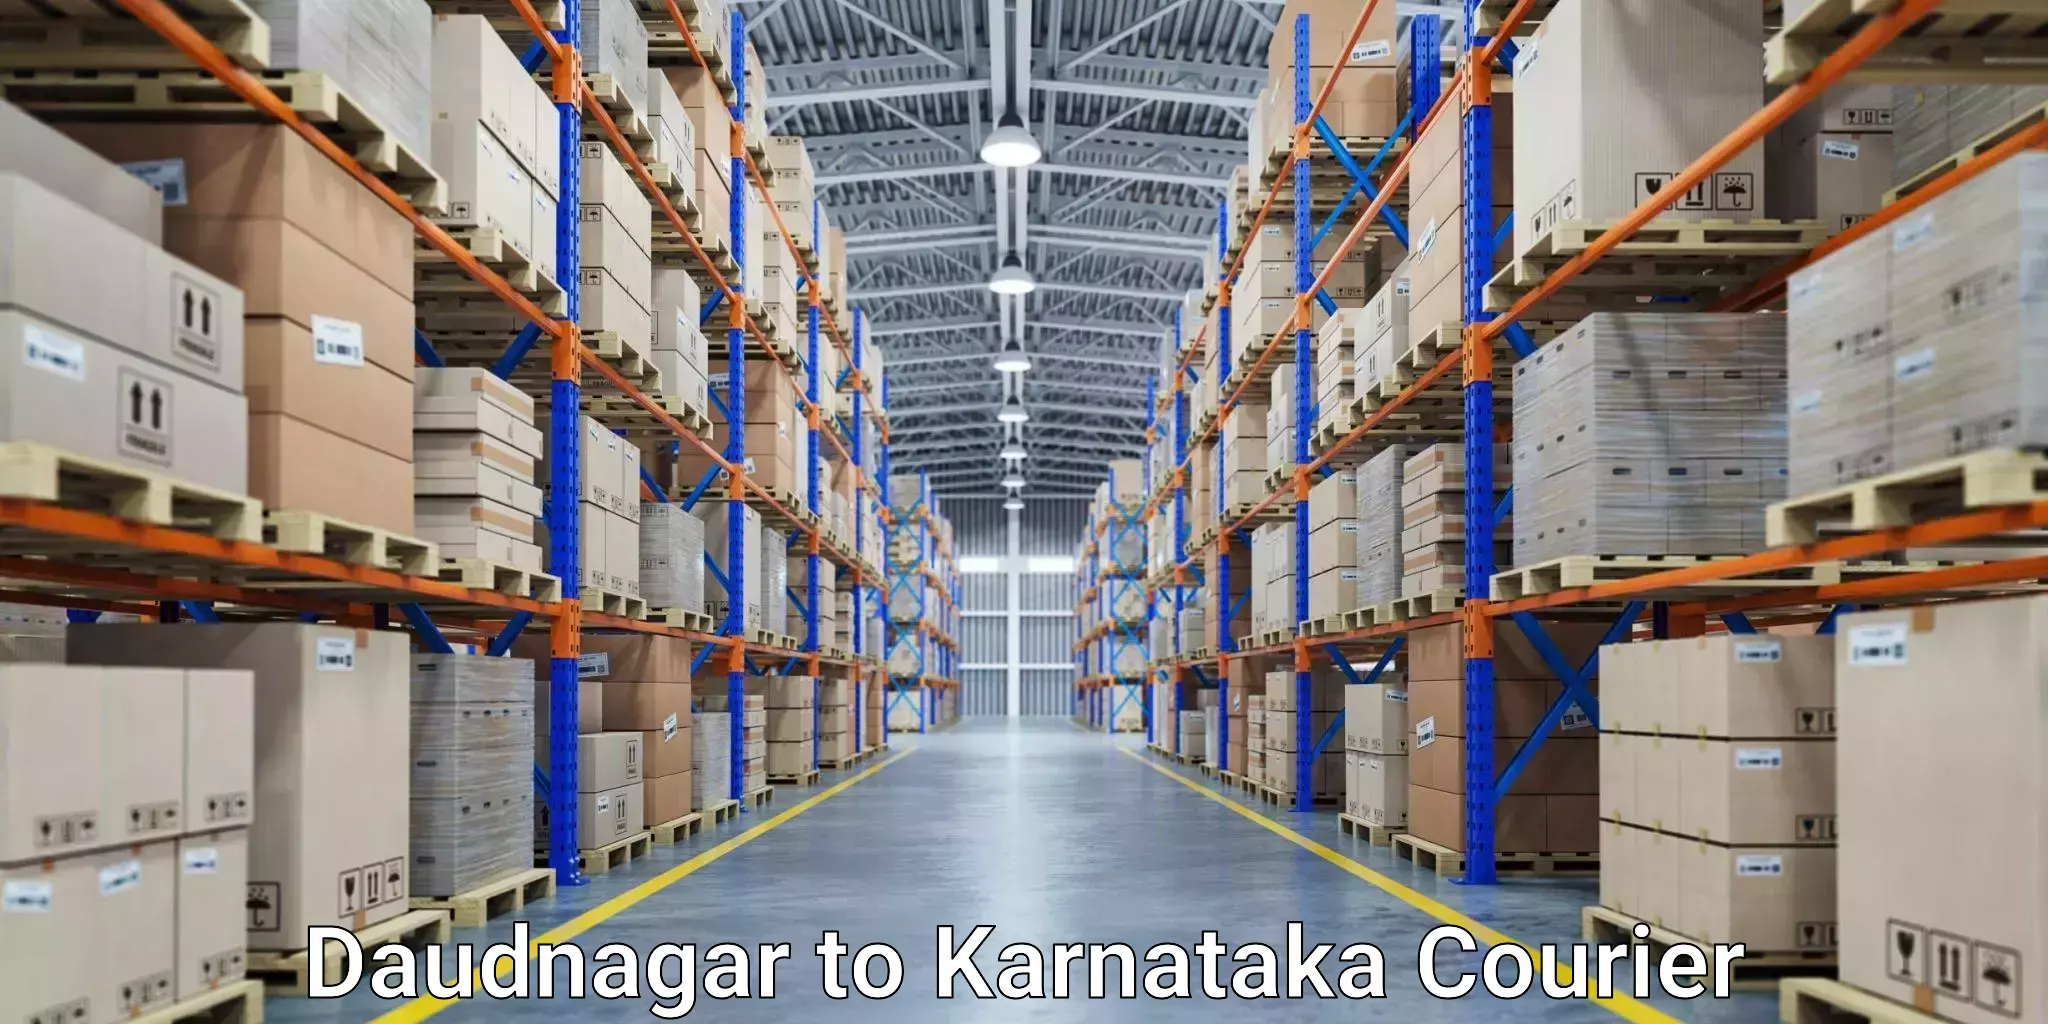 Express delivery capabilities Daudnagar to Mangalore Port